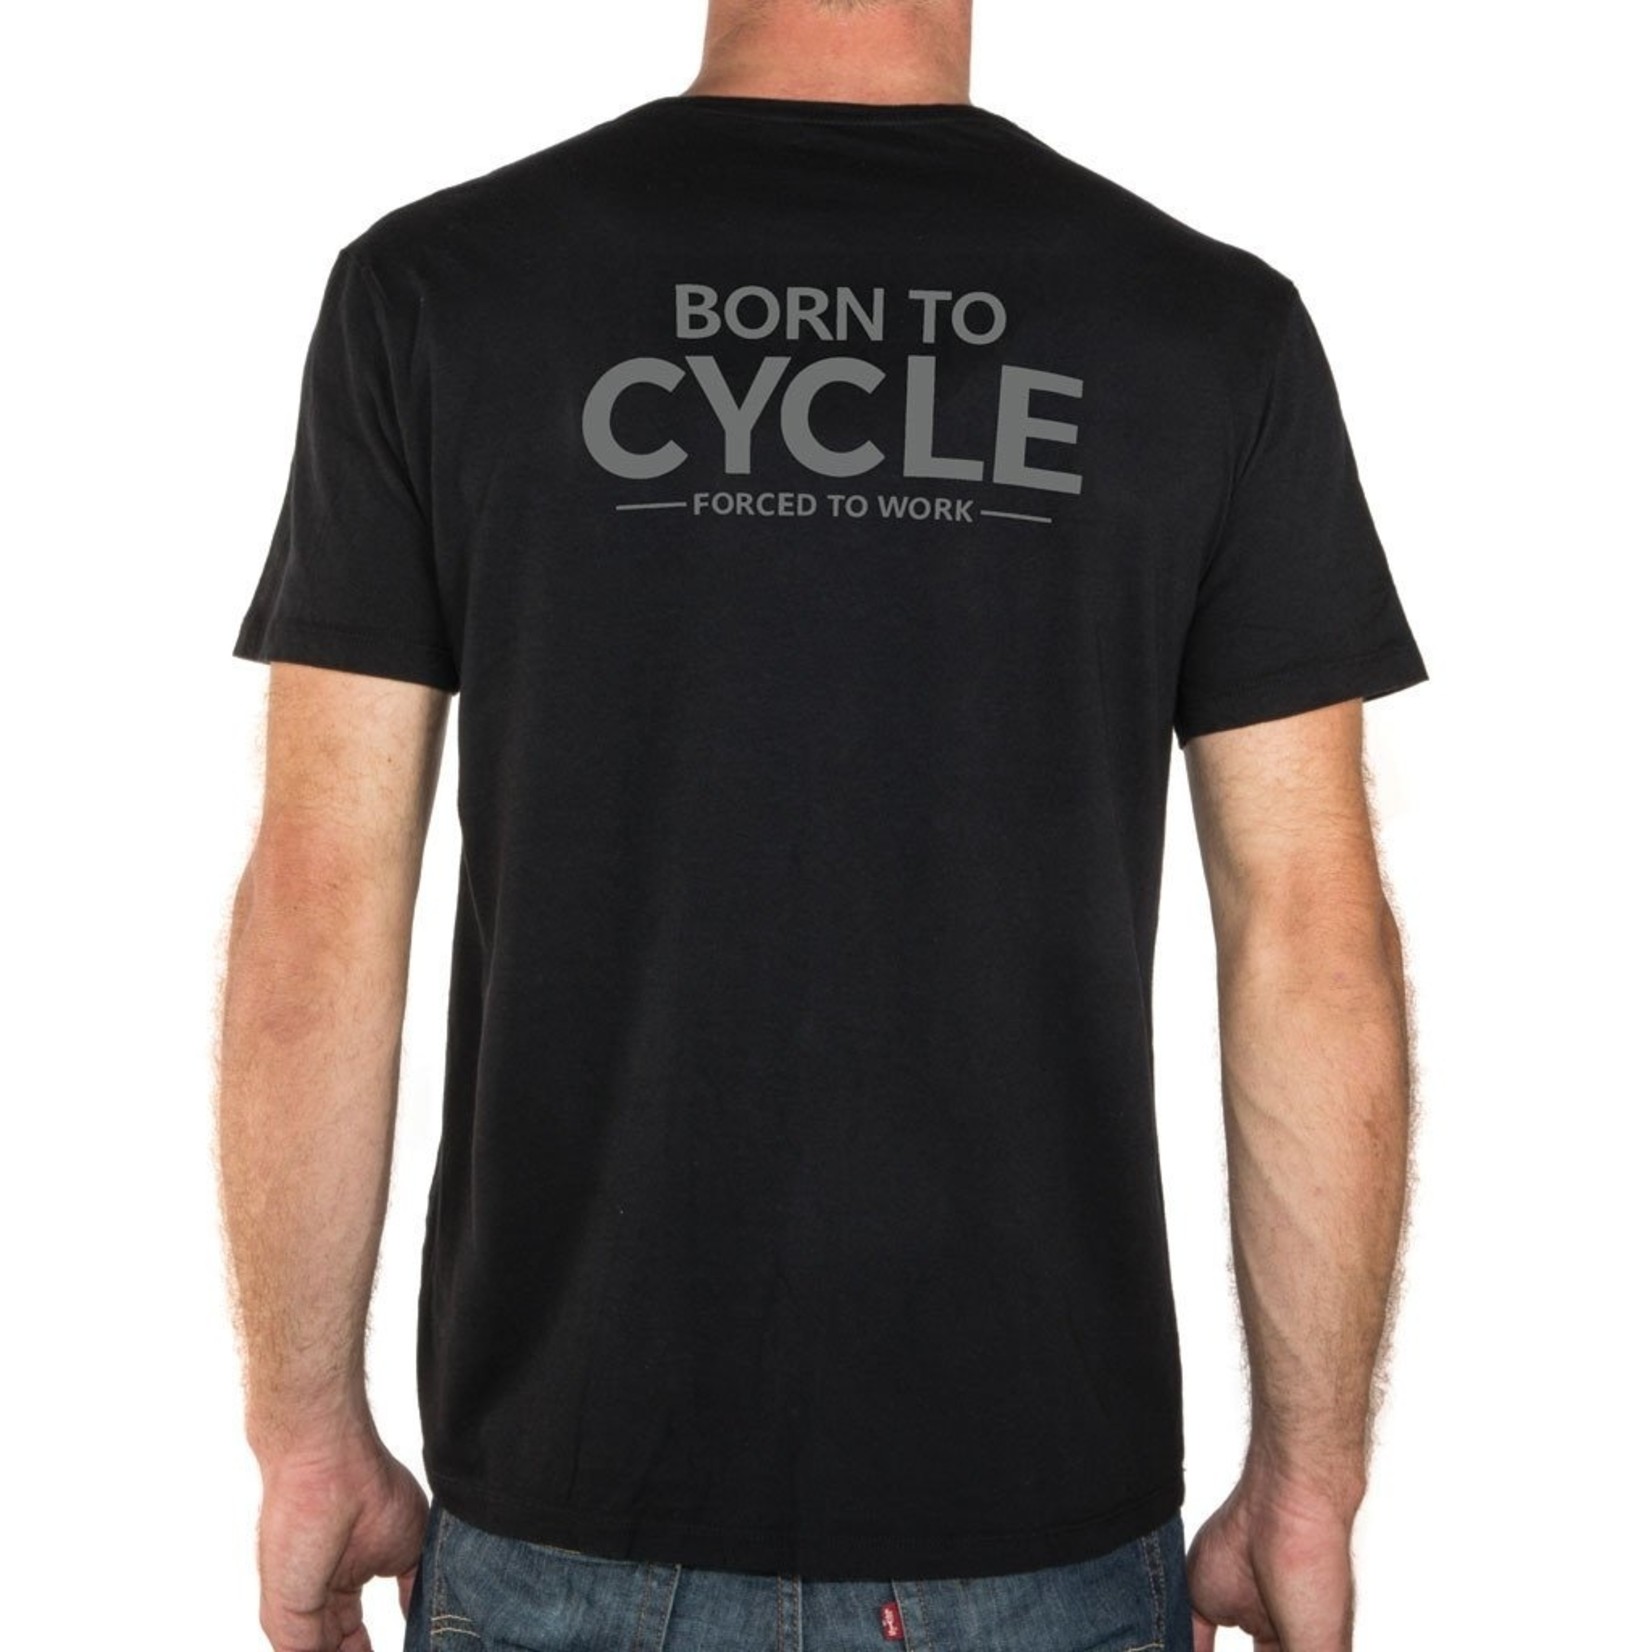 Monkey See MonkeySee Men's Born To Cycle T-Shirt - Black